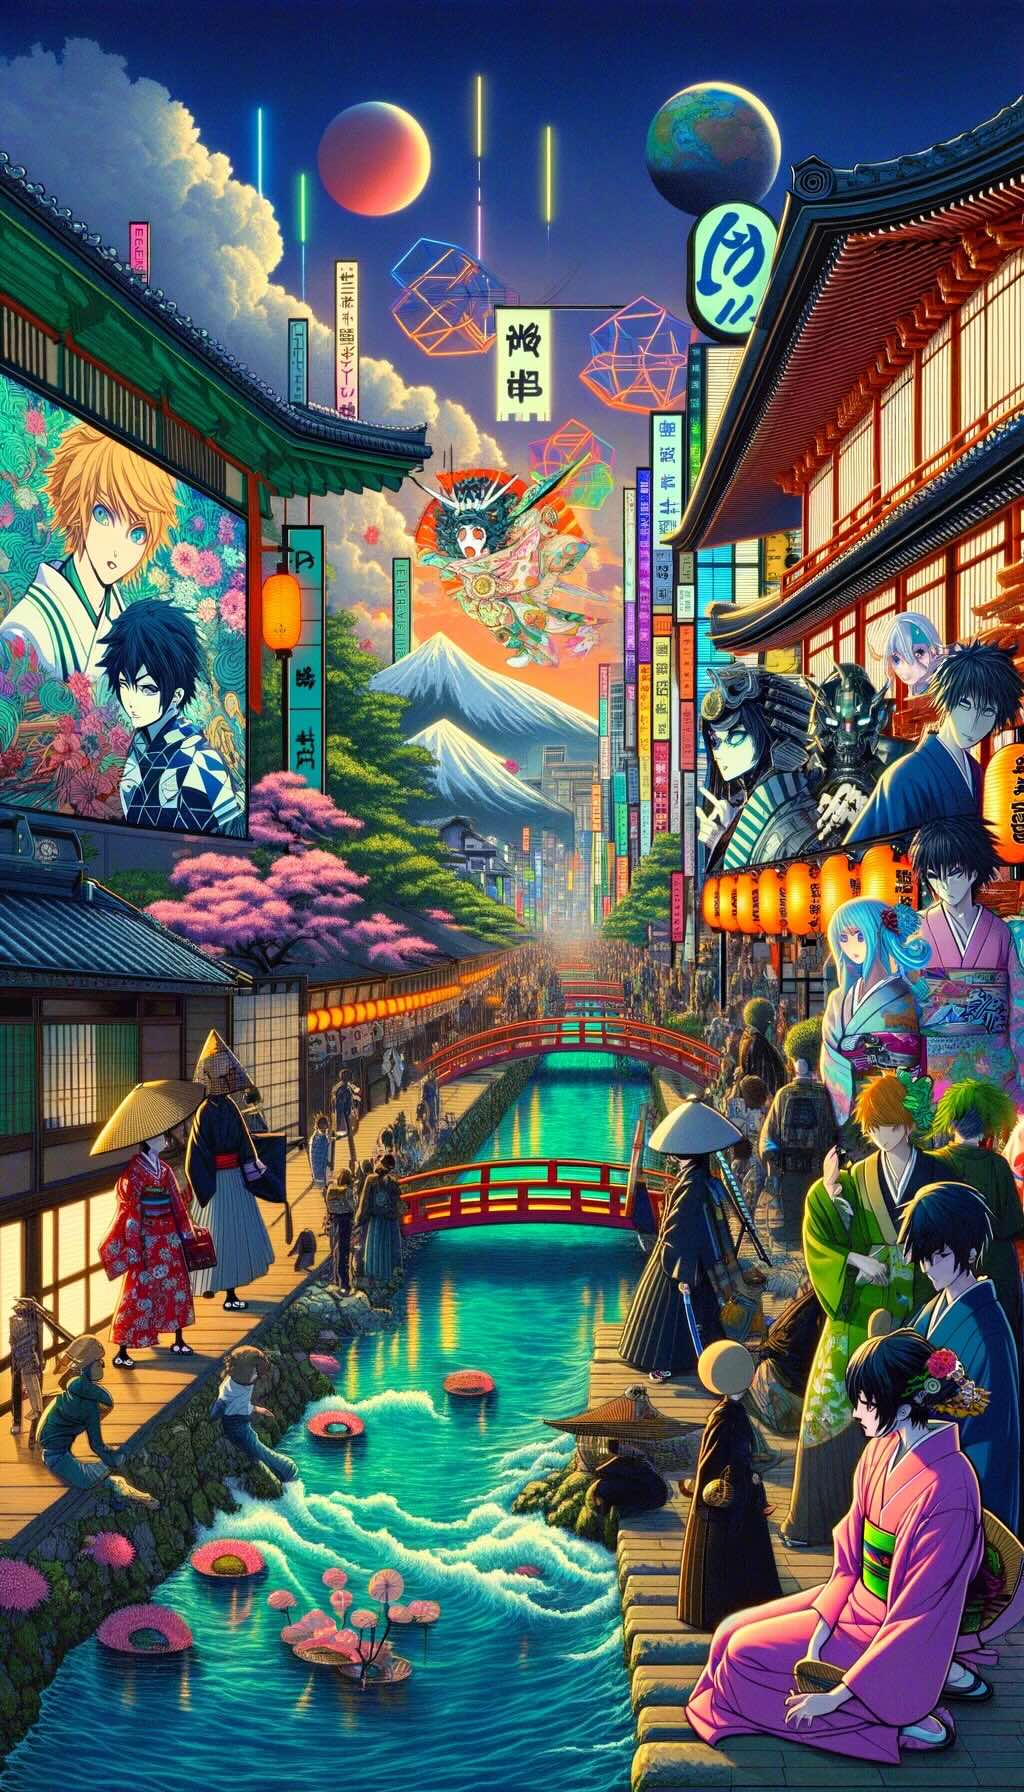 The Manga and Anime Trail: 10 Days in Japan’s Otaku Culture